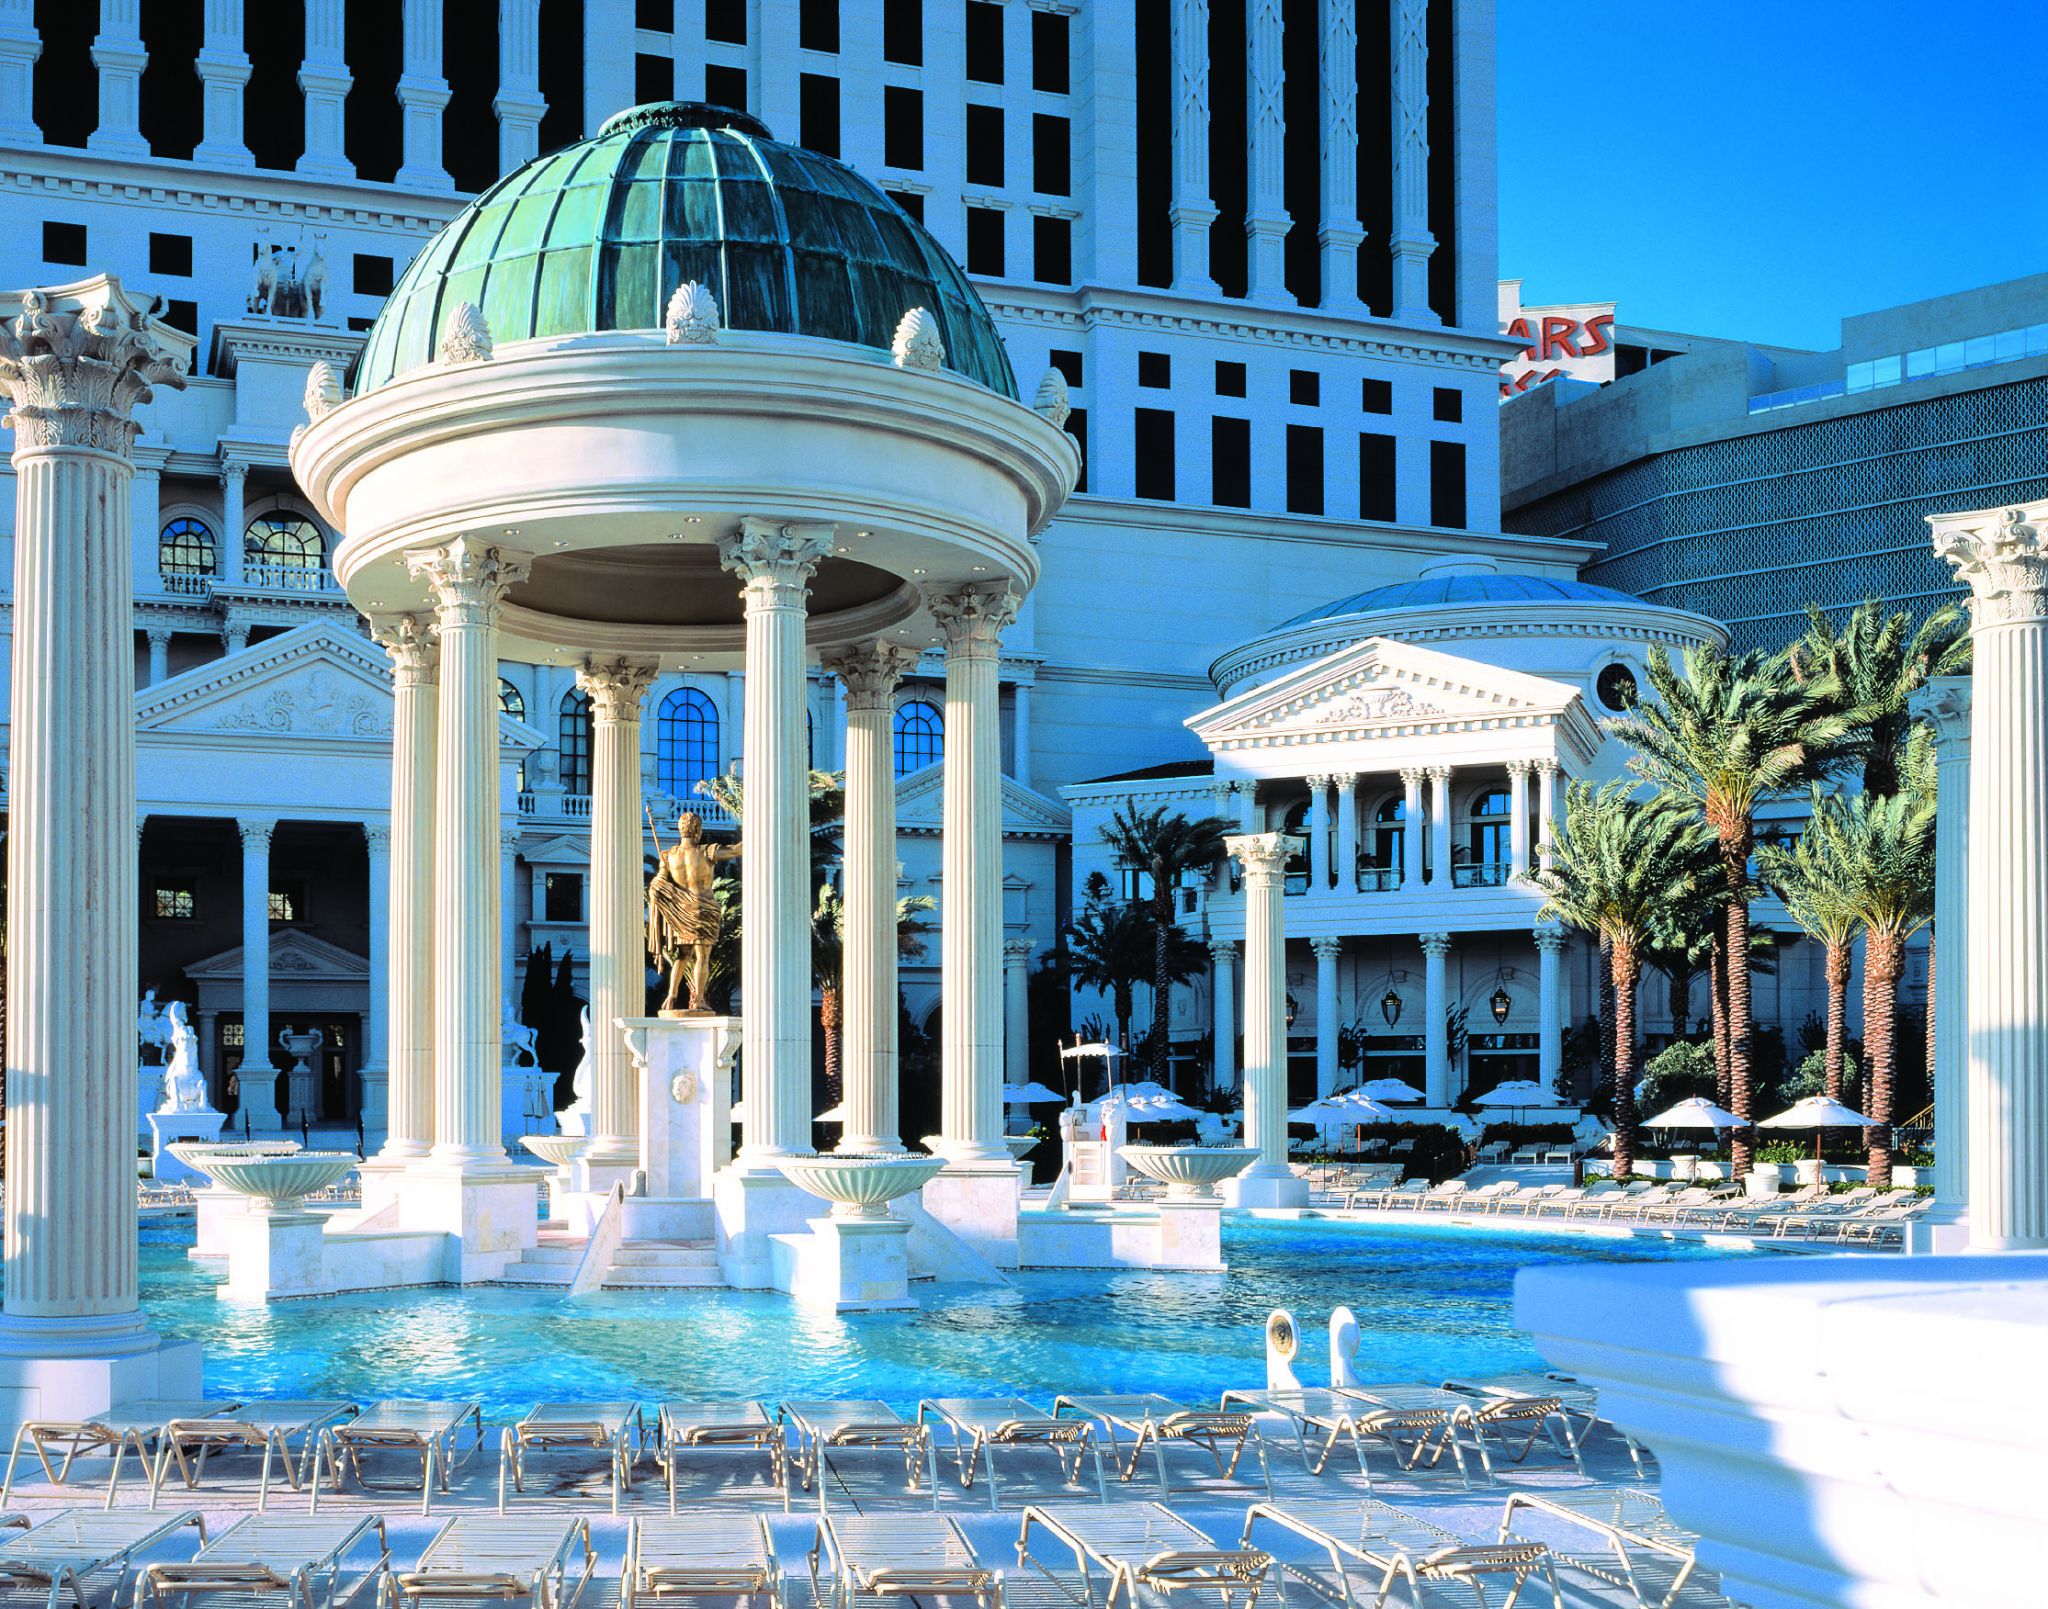 Scene Vegas Pool Deck + Flowrider - Planet Hollywood Las Vegas